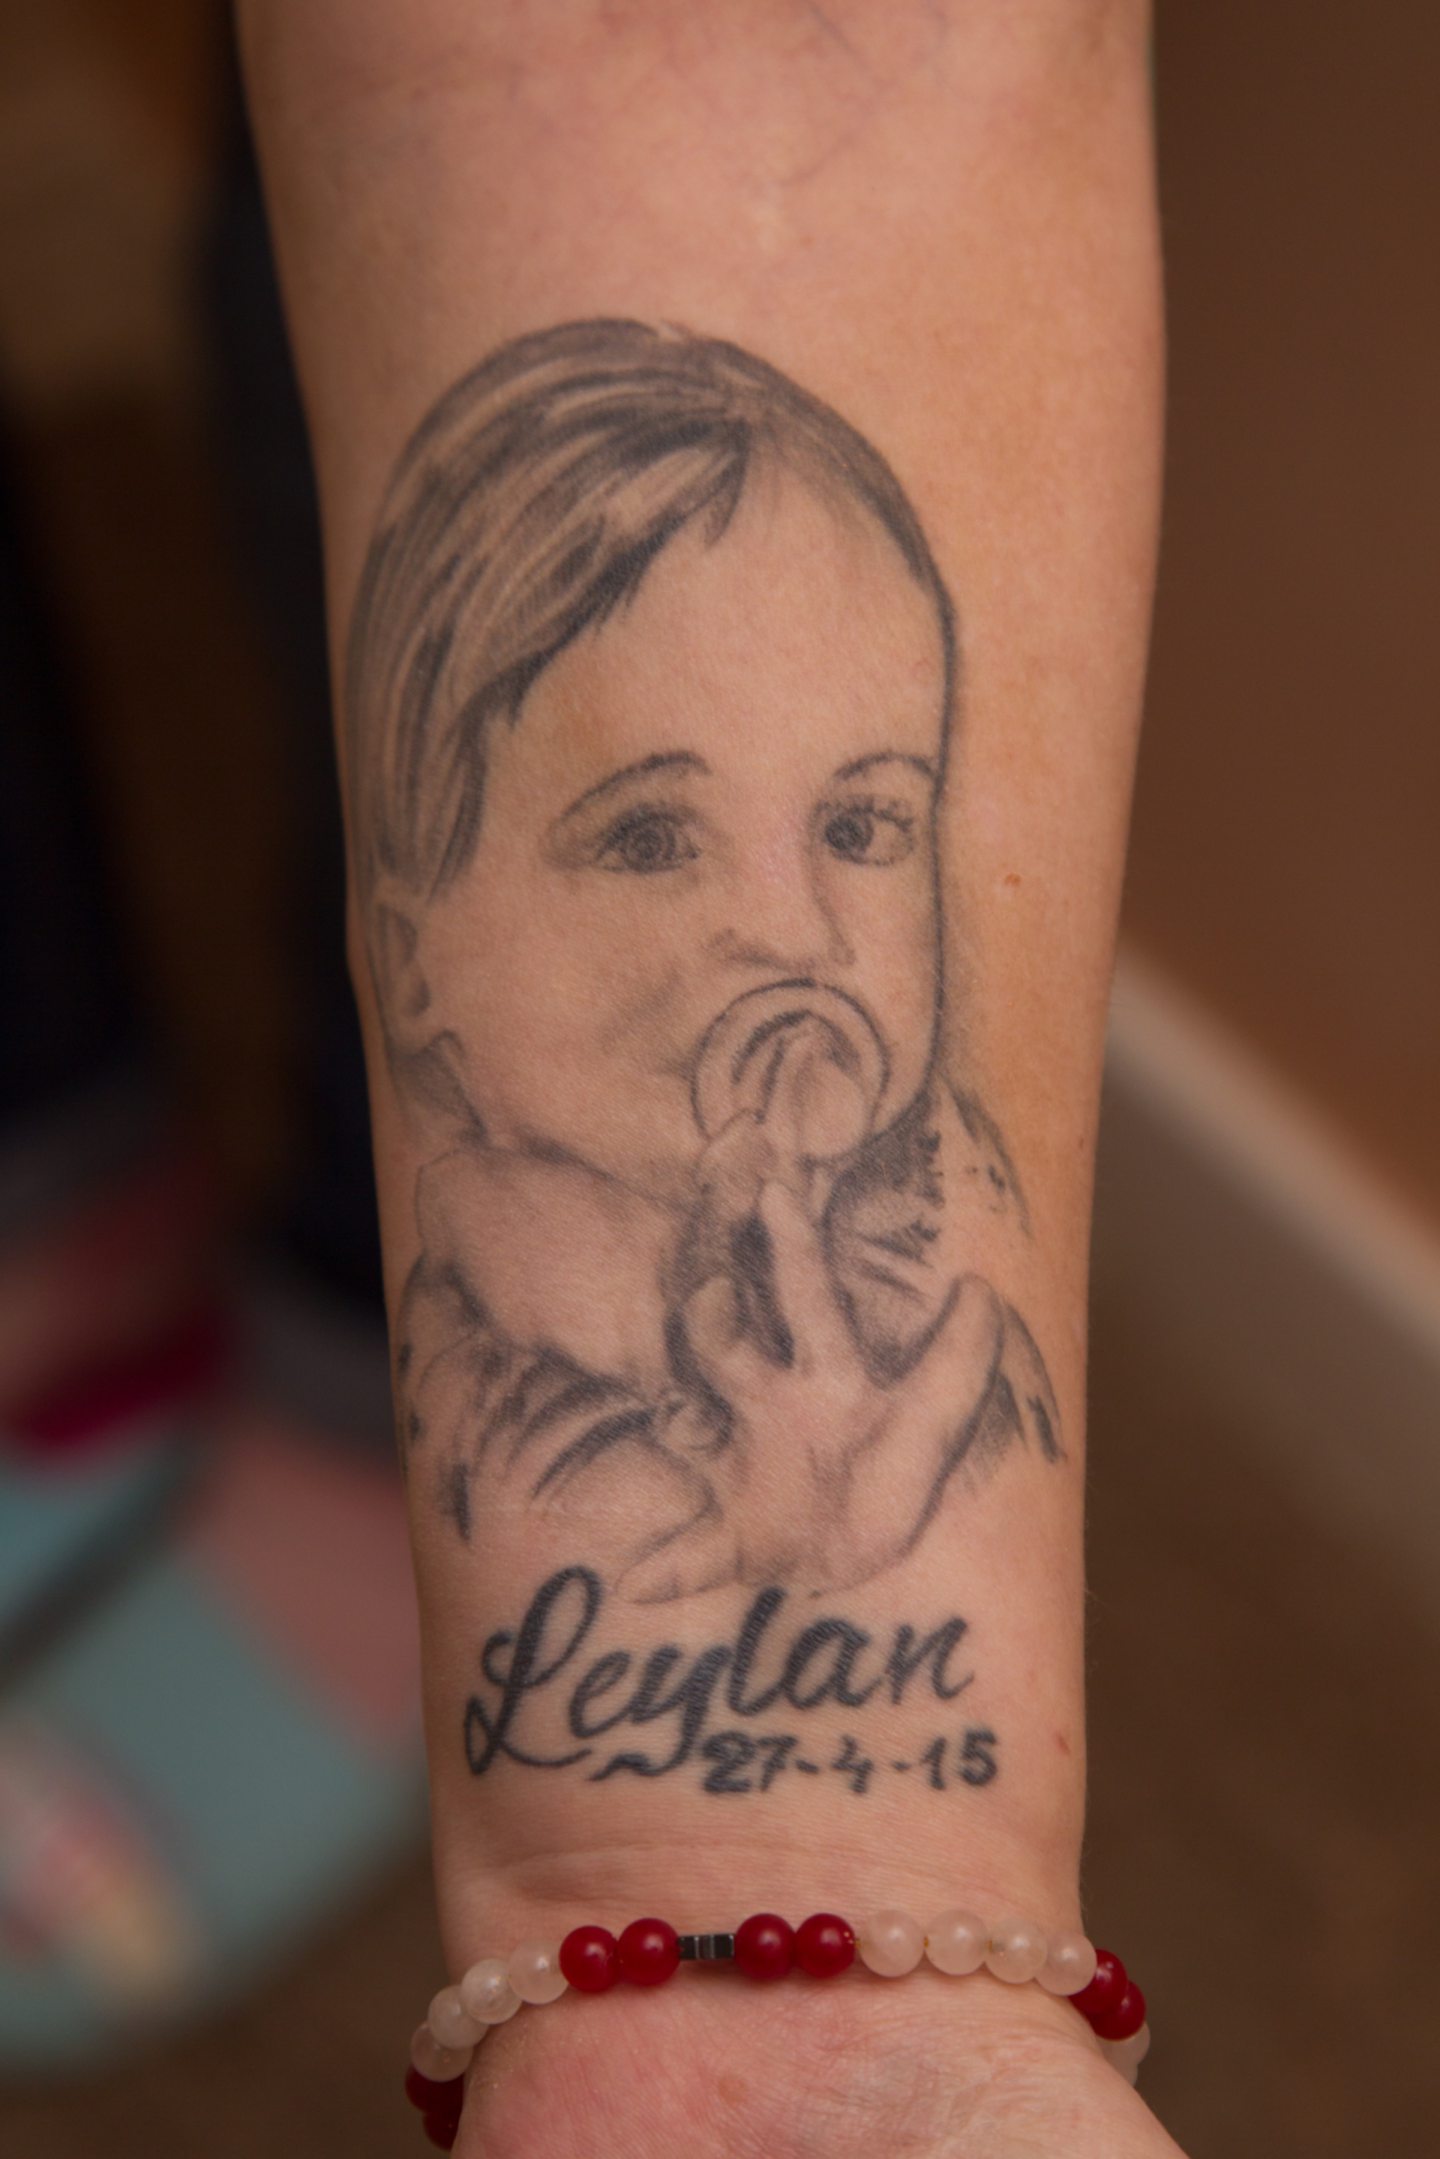 A tattoo representing Leylan Forte on mum Leanne's arm.